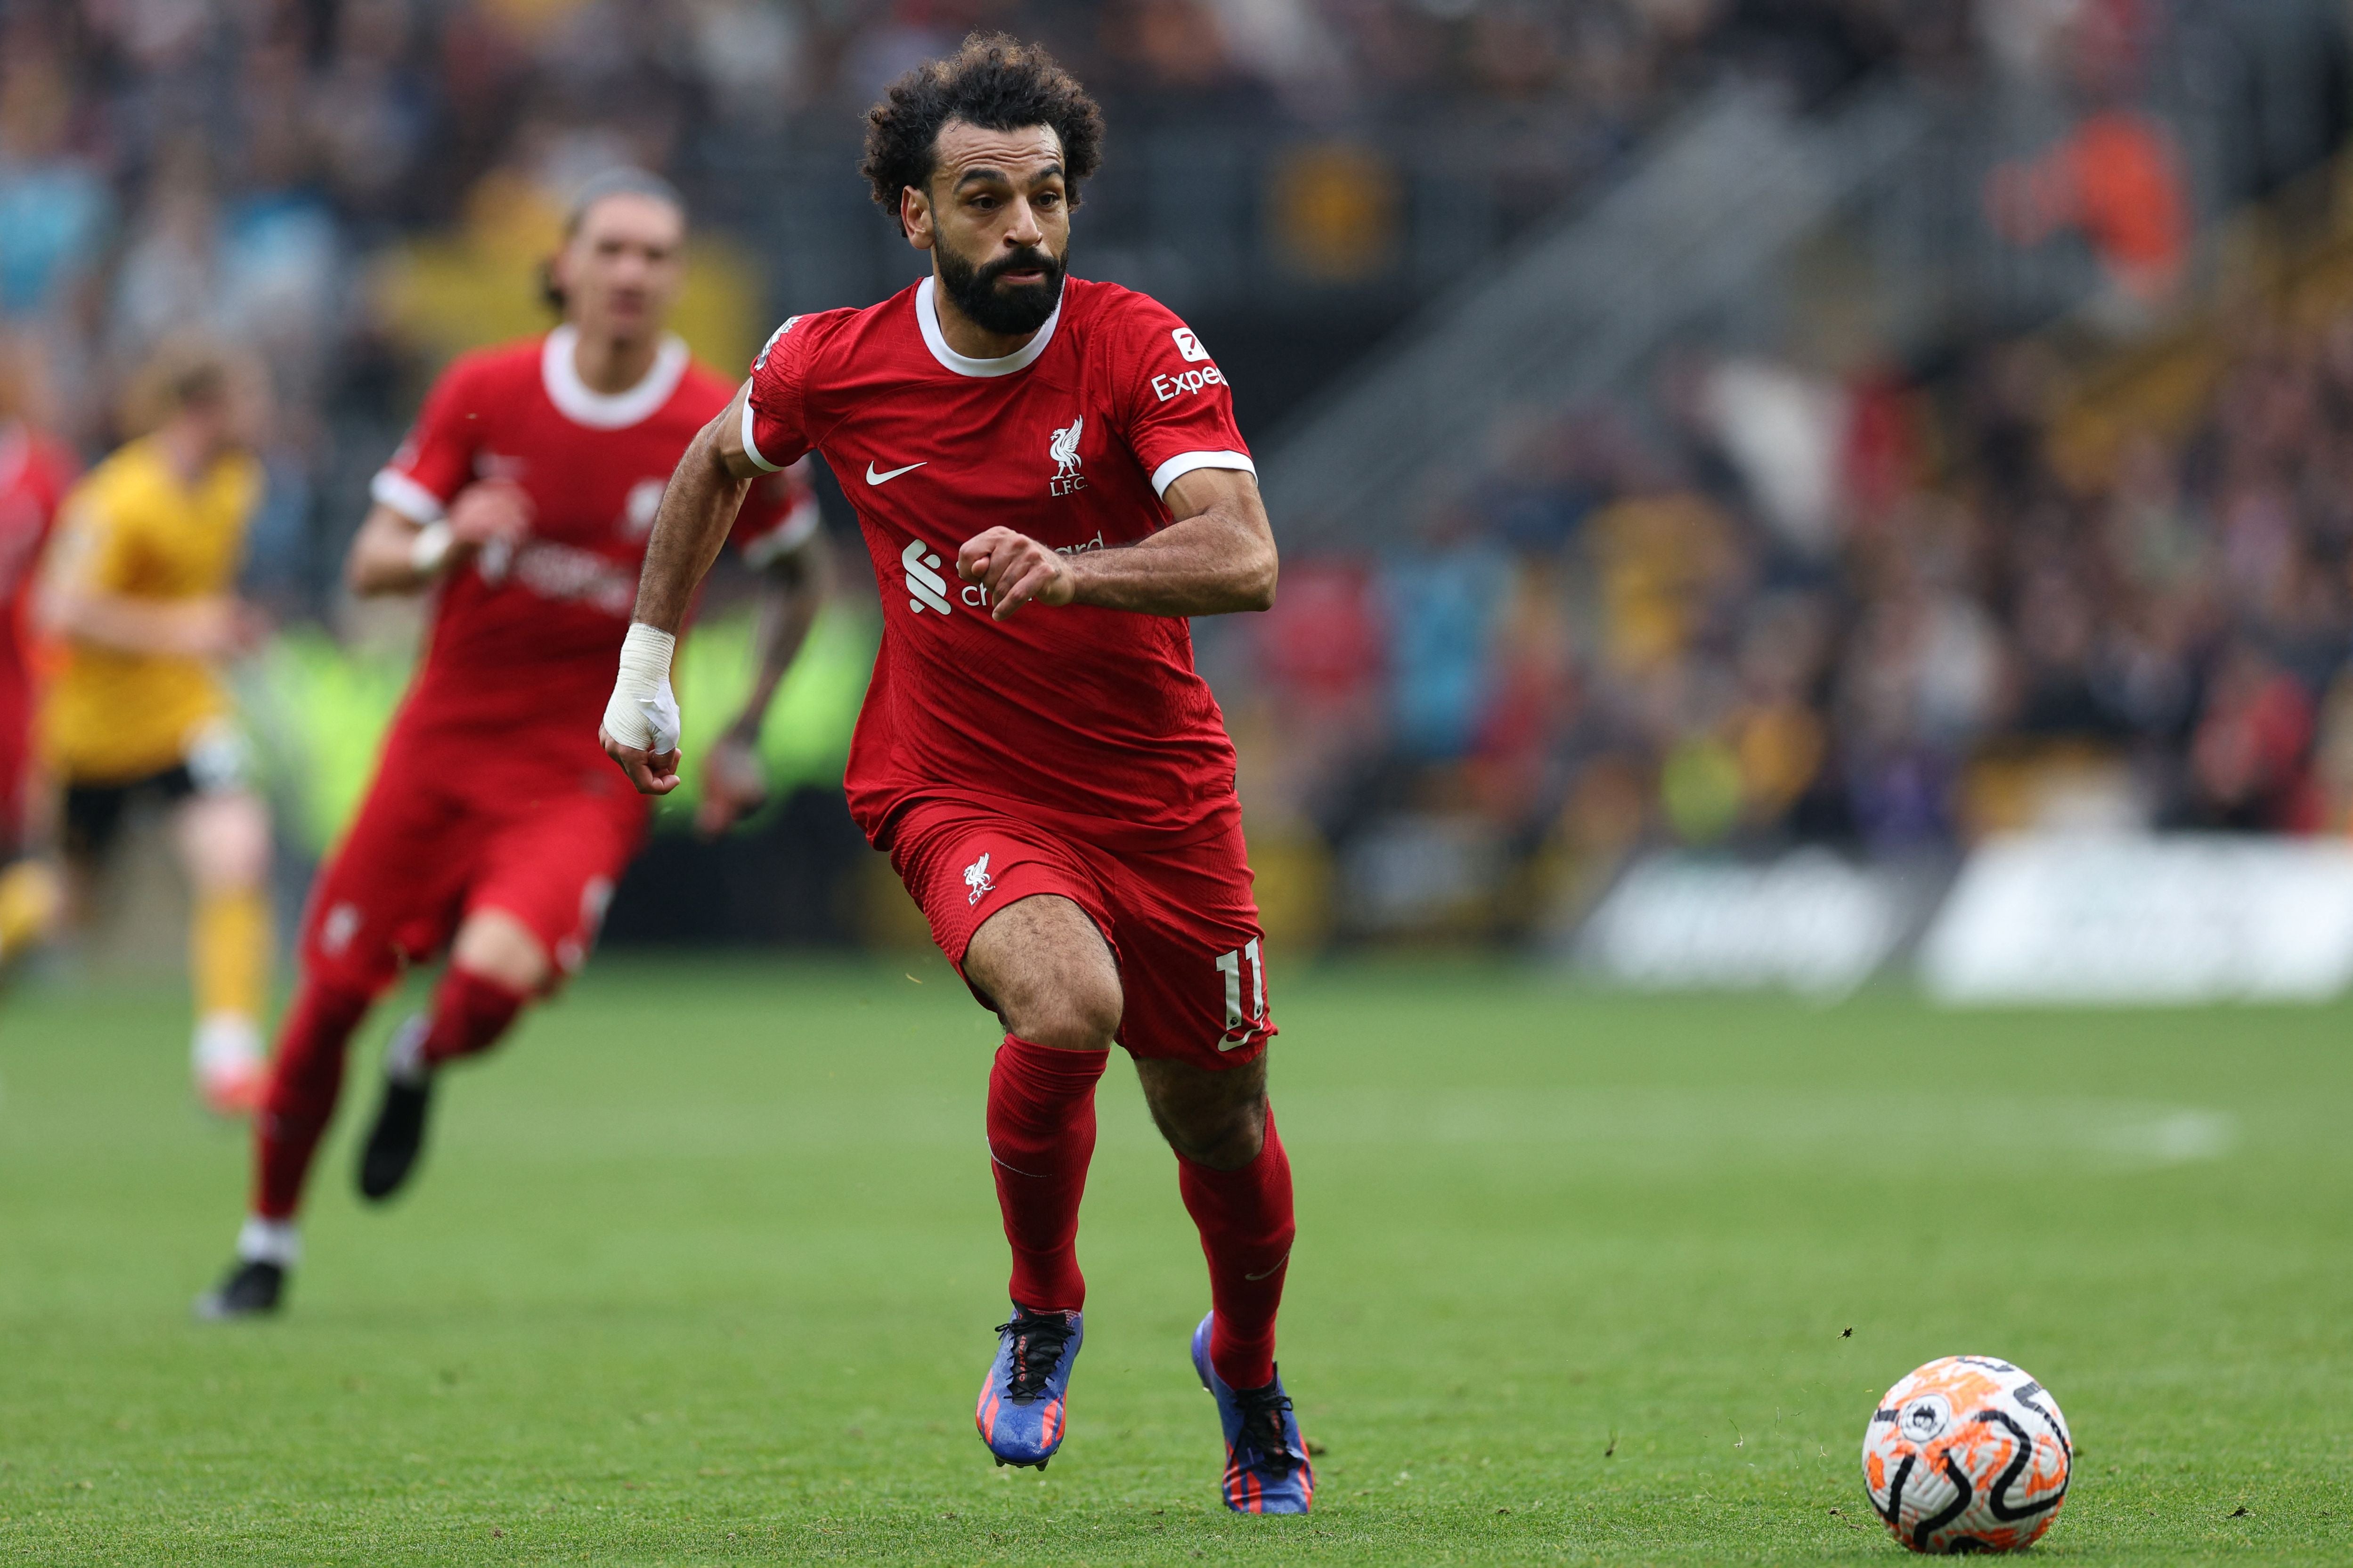 Liverpool’s goalscoring machine, Mo Salah, is also developing into a fine supplier for Jurgen Klopp’s side